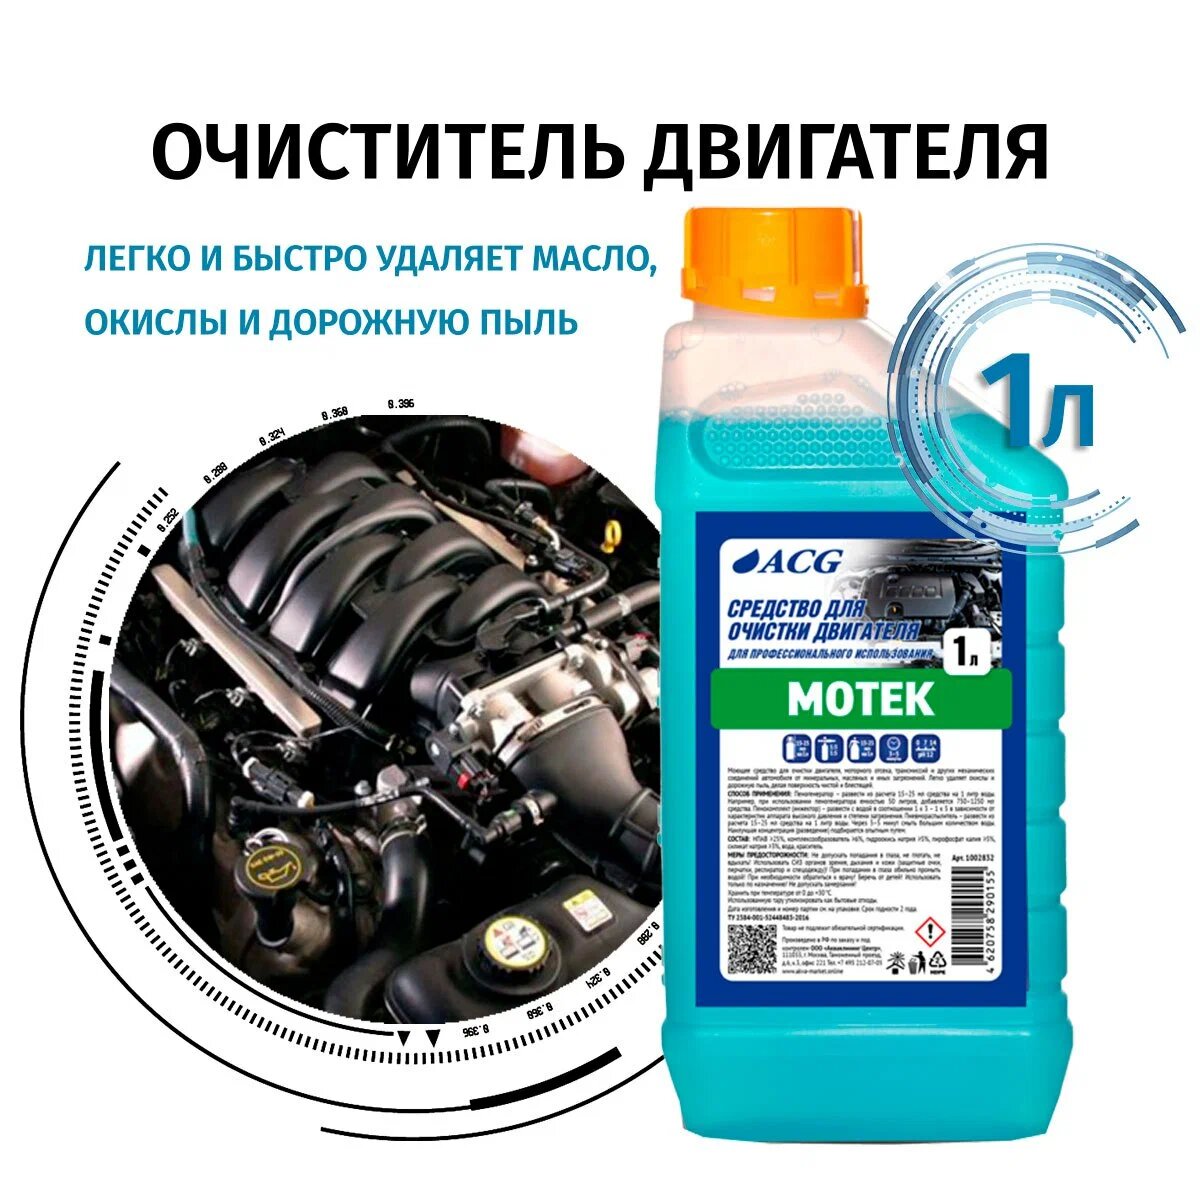 Средство для мойки двигателя 1 кг MOTEK ACG 1002832